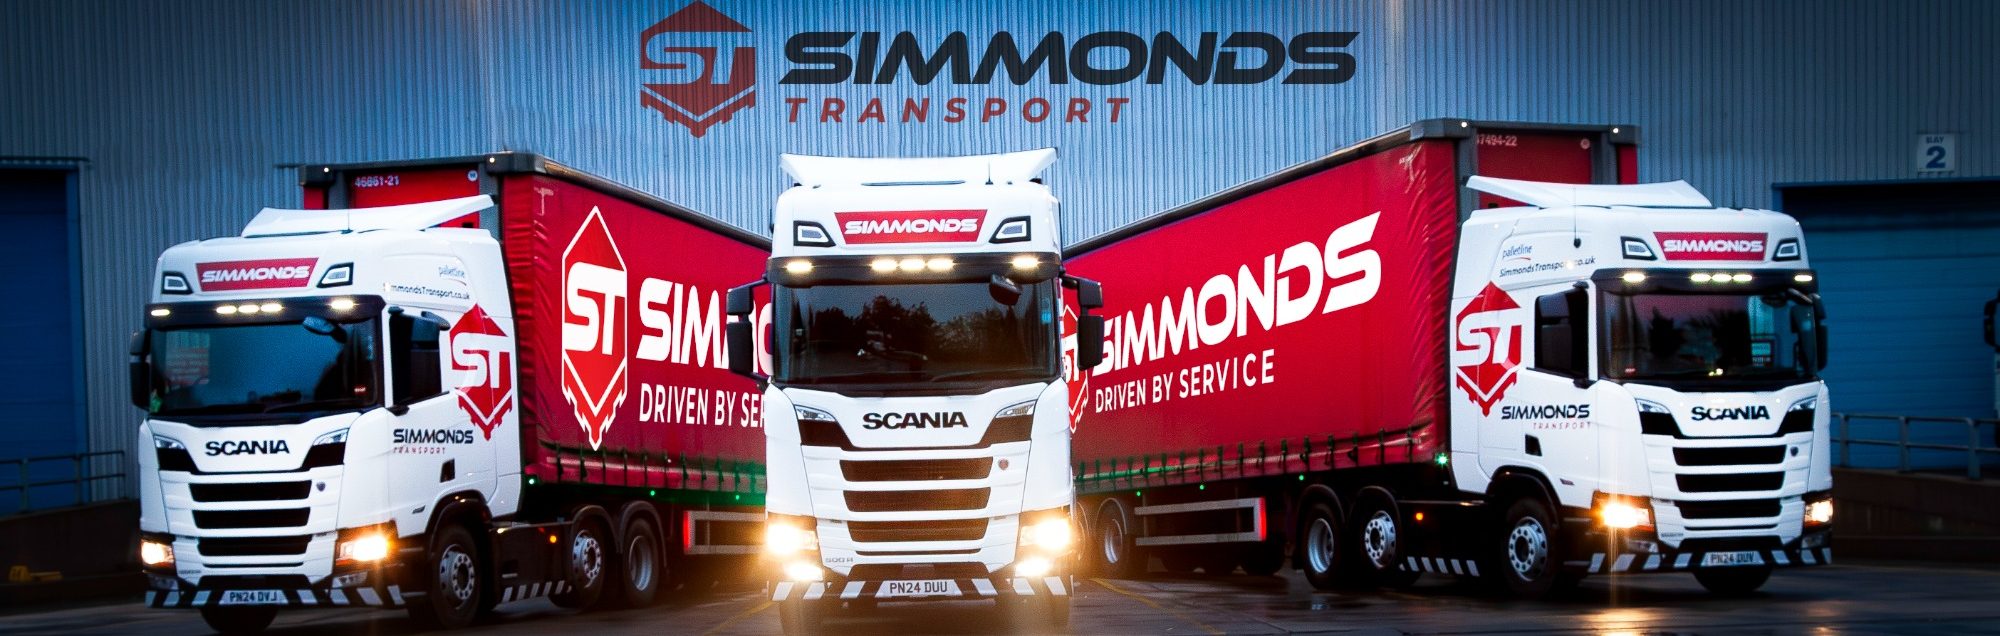 Simmonds transport Ltd, Driven by service.